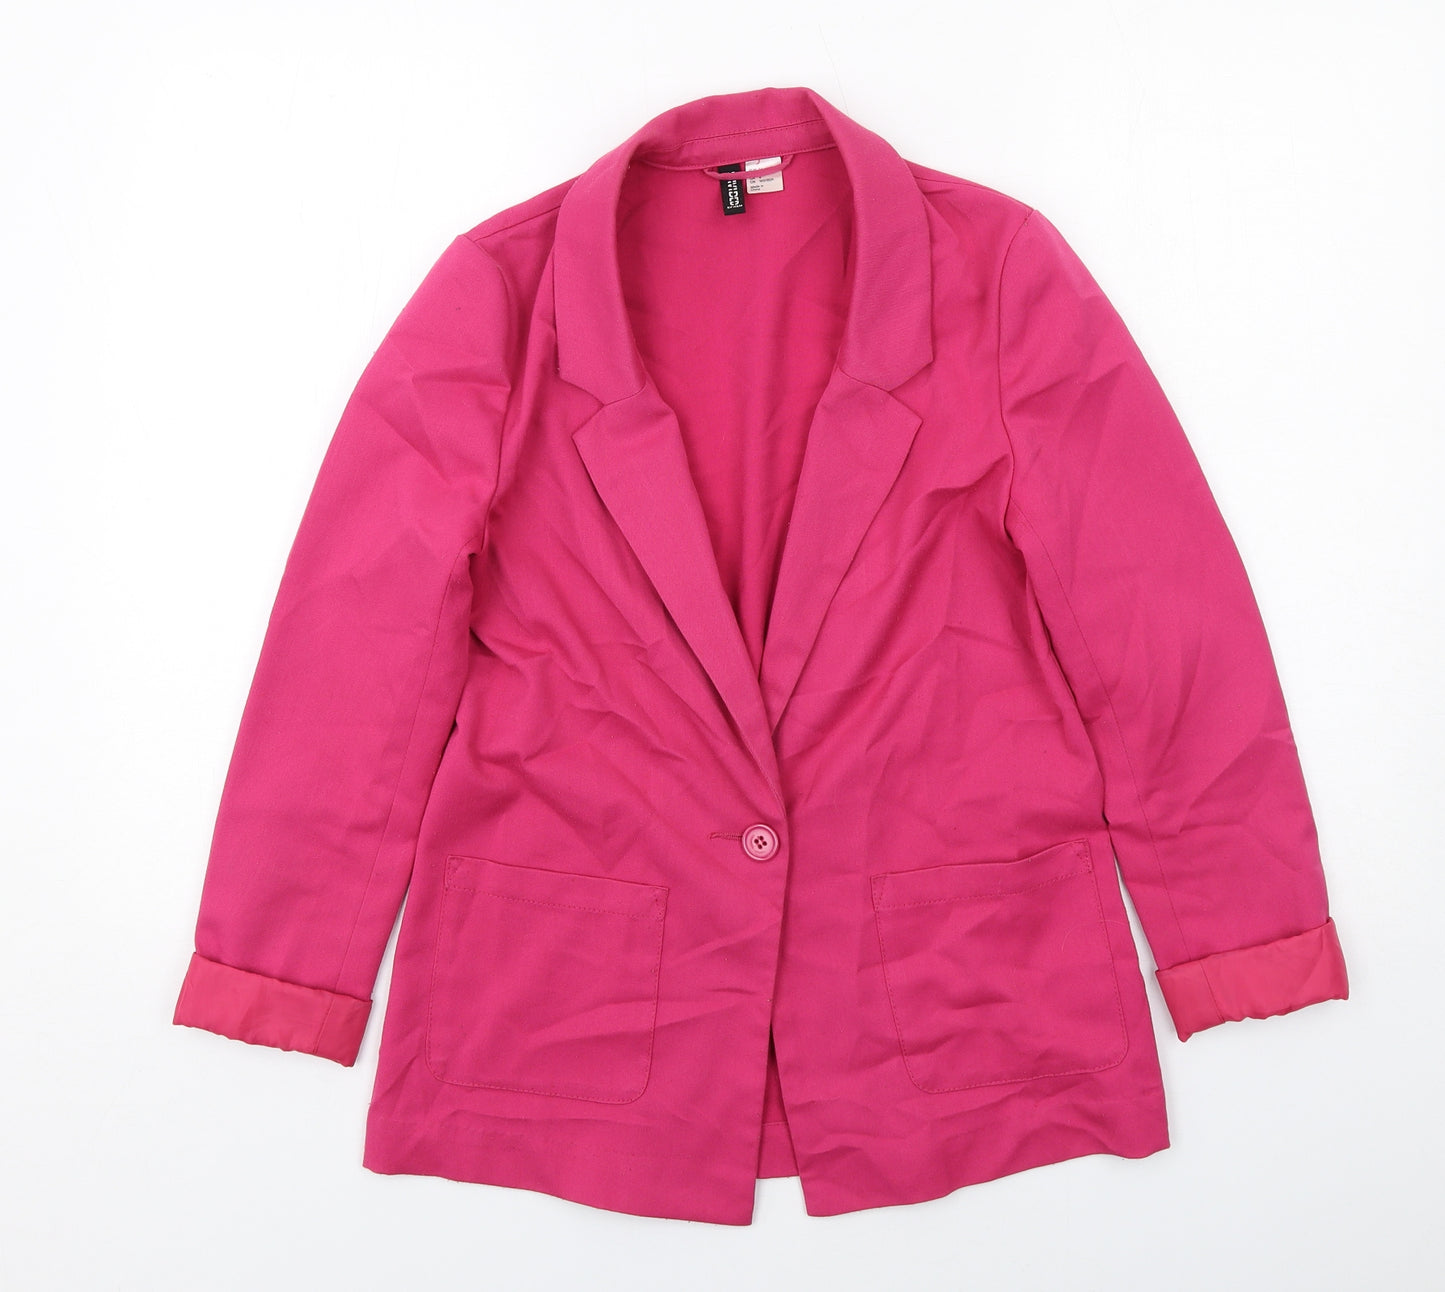 H&M Womens Pink Jacket Blazer Size 6 Button